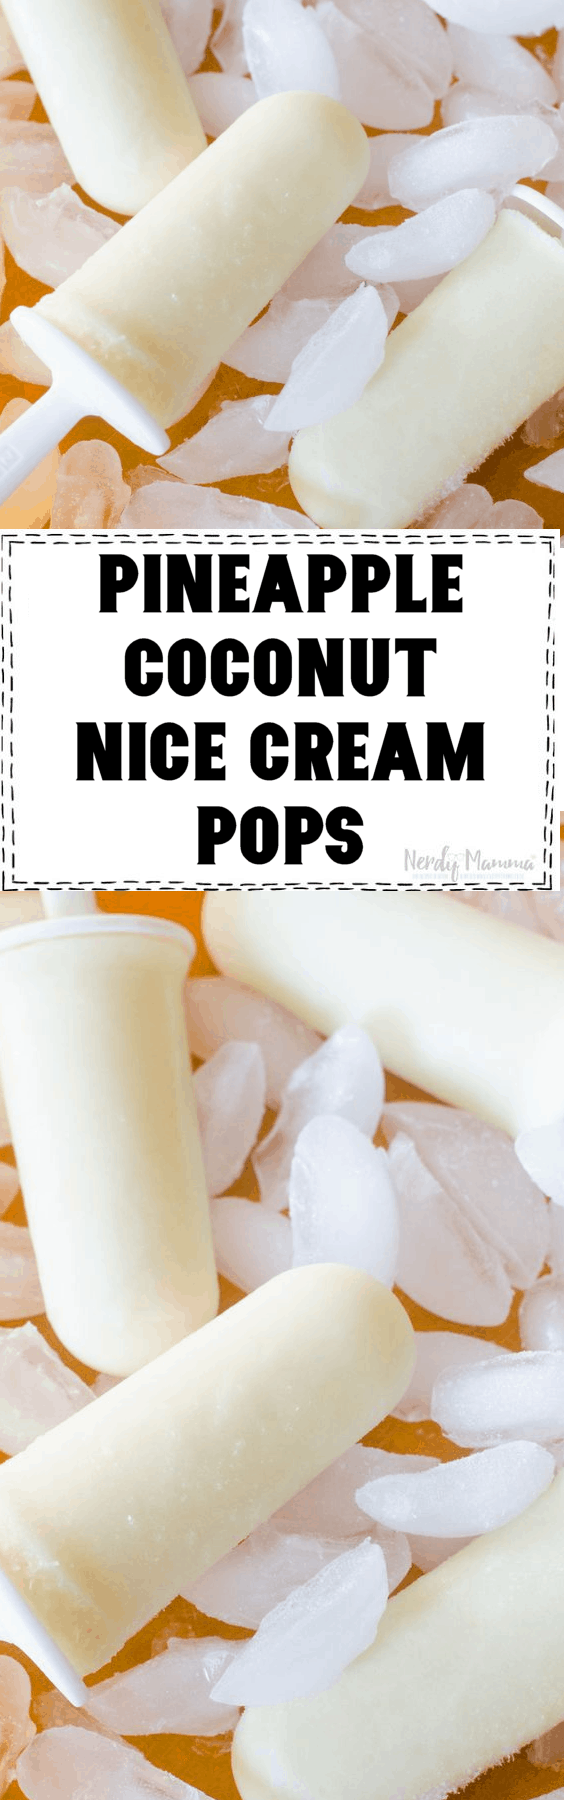 Pineapple Coconut Nice Cream Pops